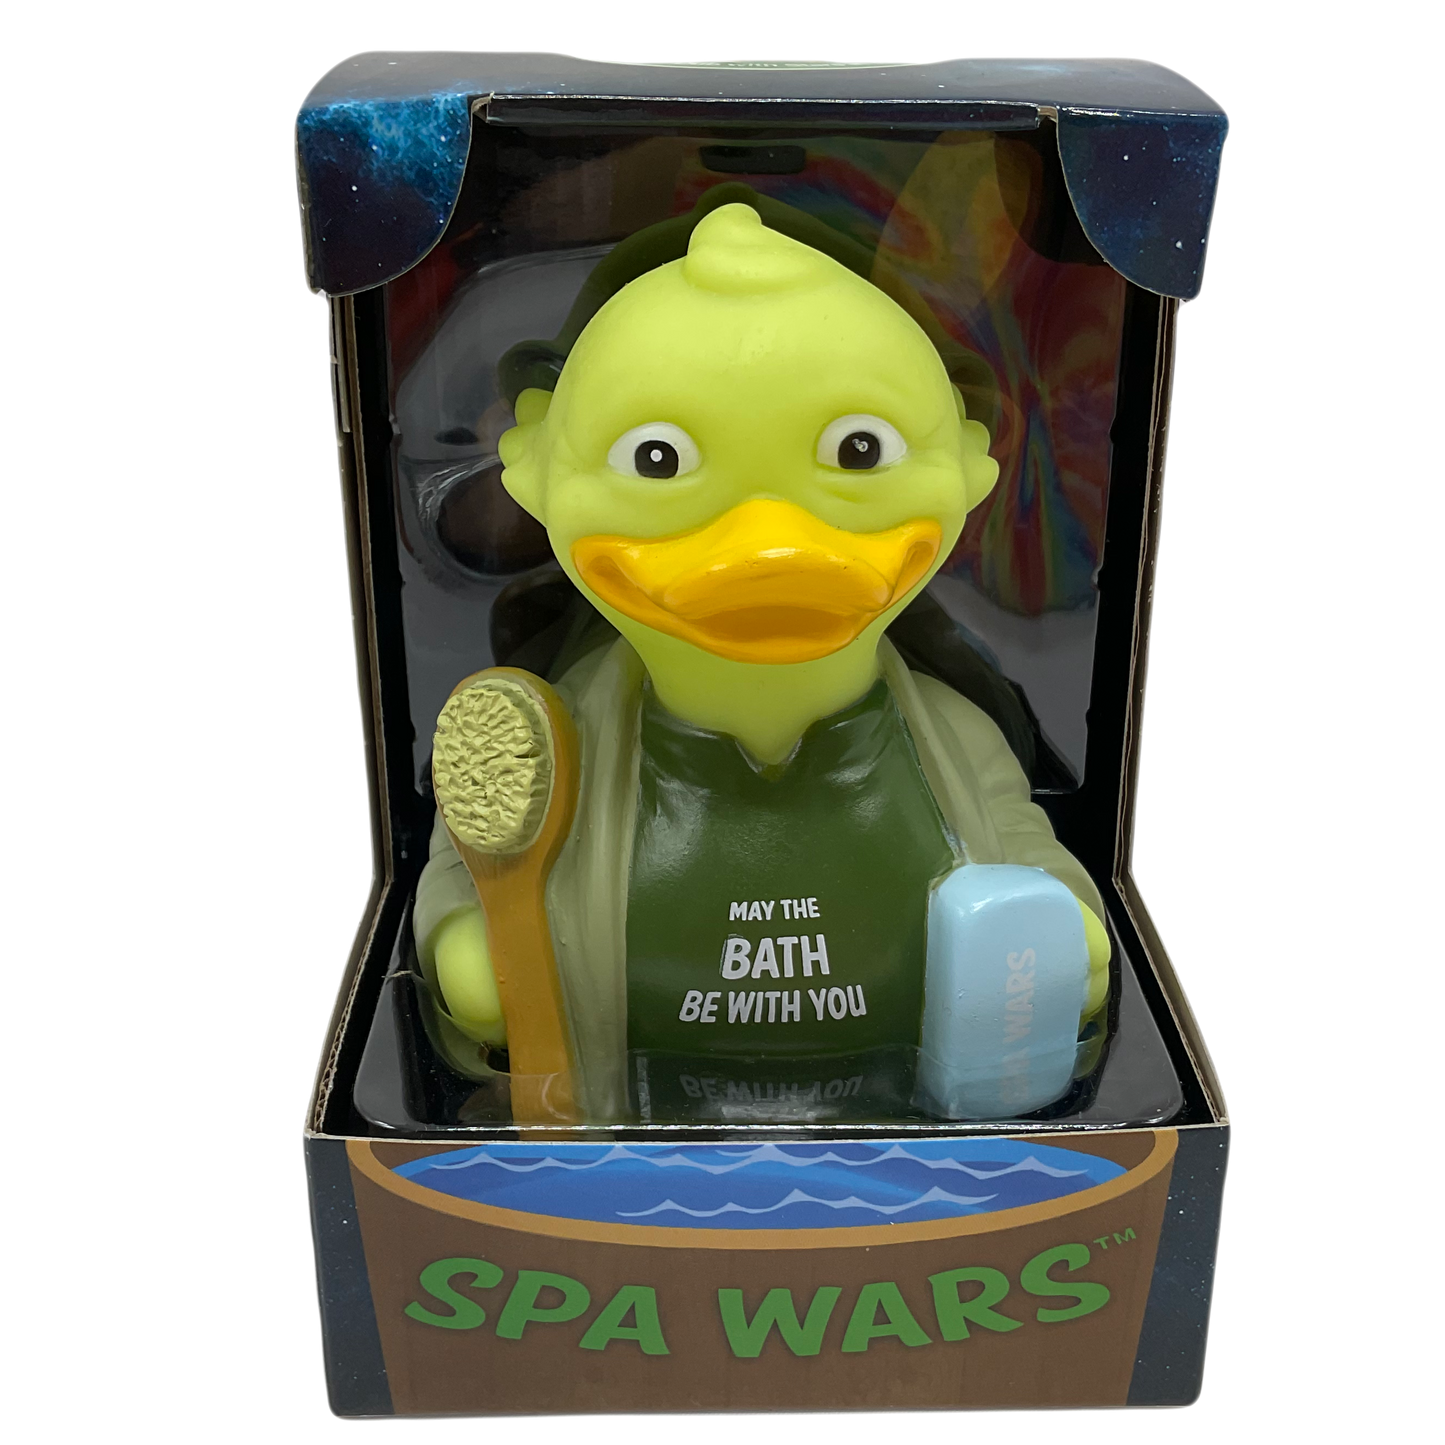 Spa Wars Star Wars Yoda Celebriduck Rubber Duck